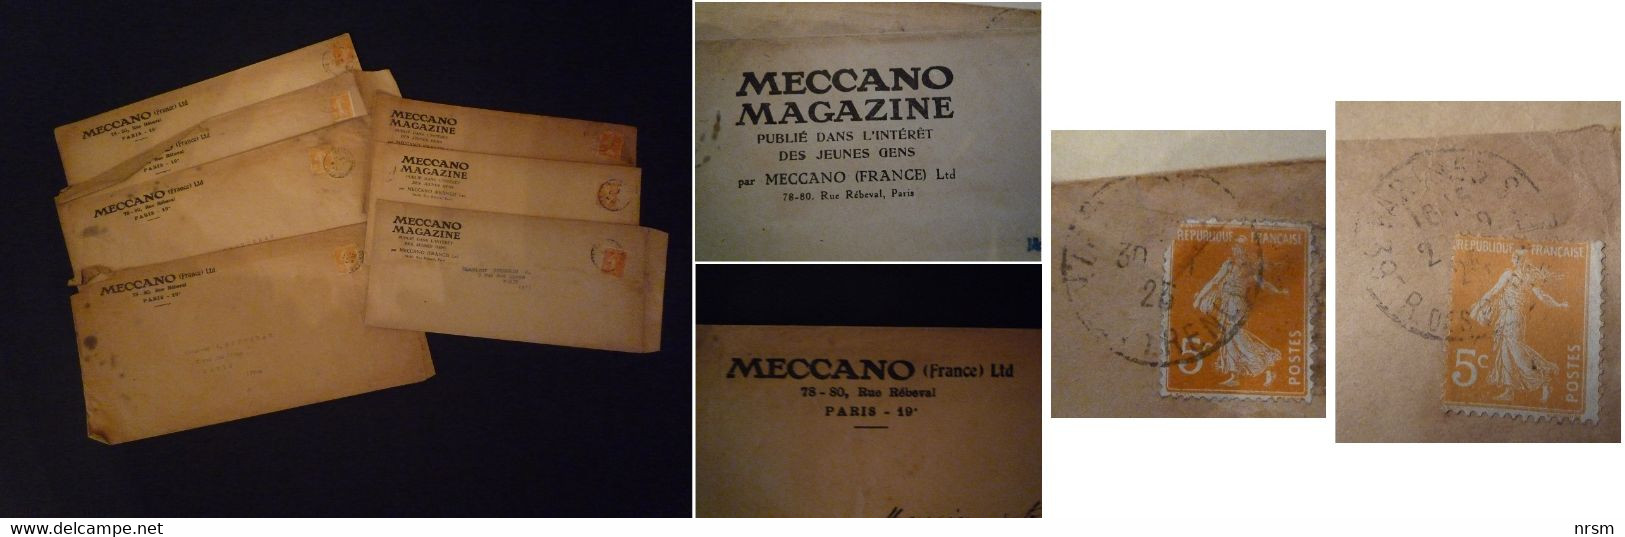 MECCANO / Lot de 20 manuels + 7 enveloppes de correspondance